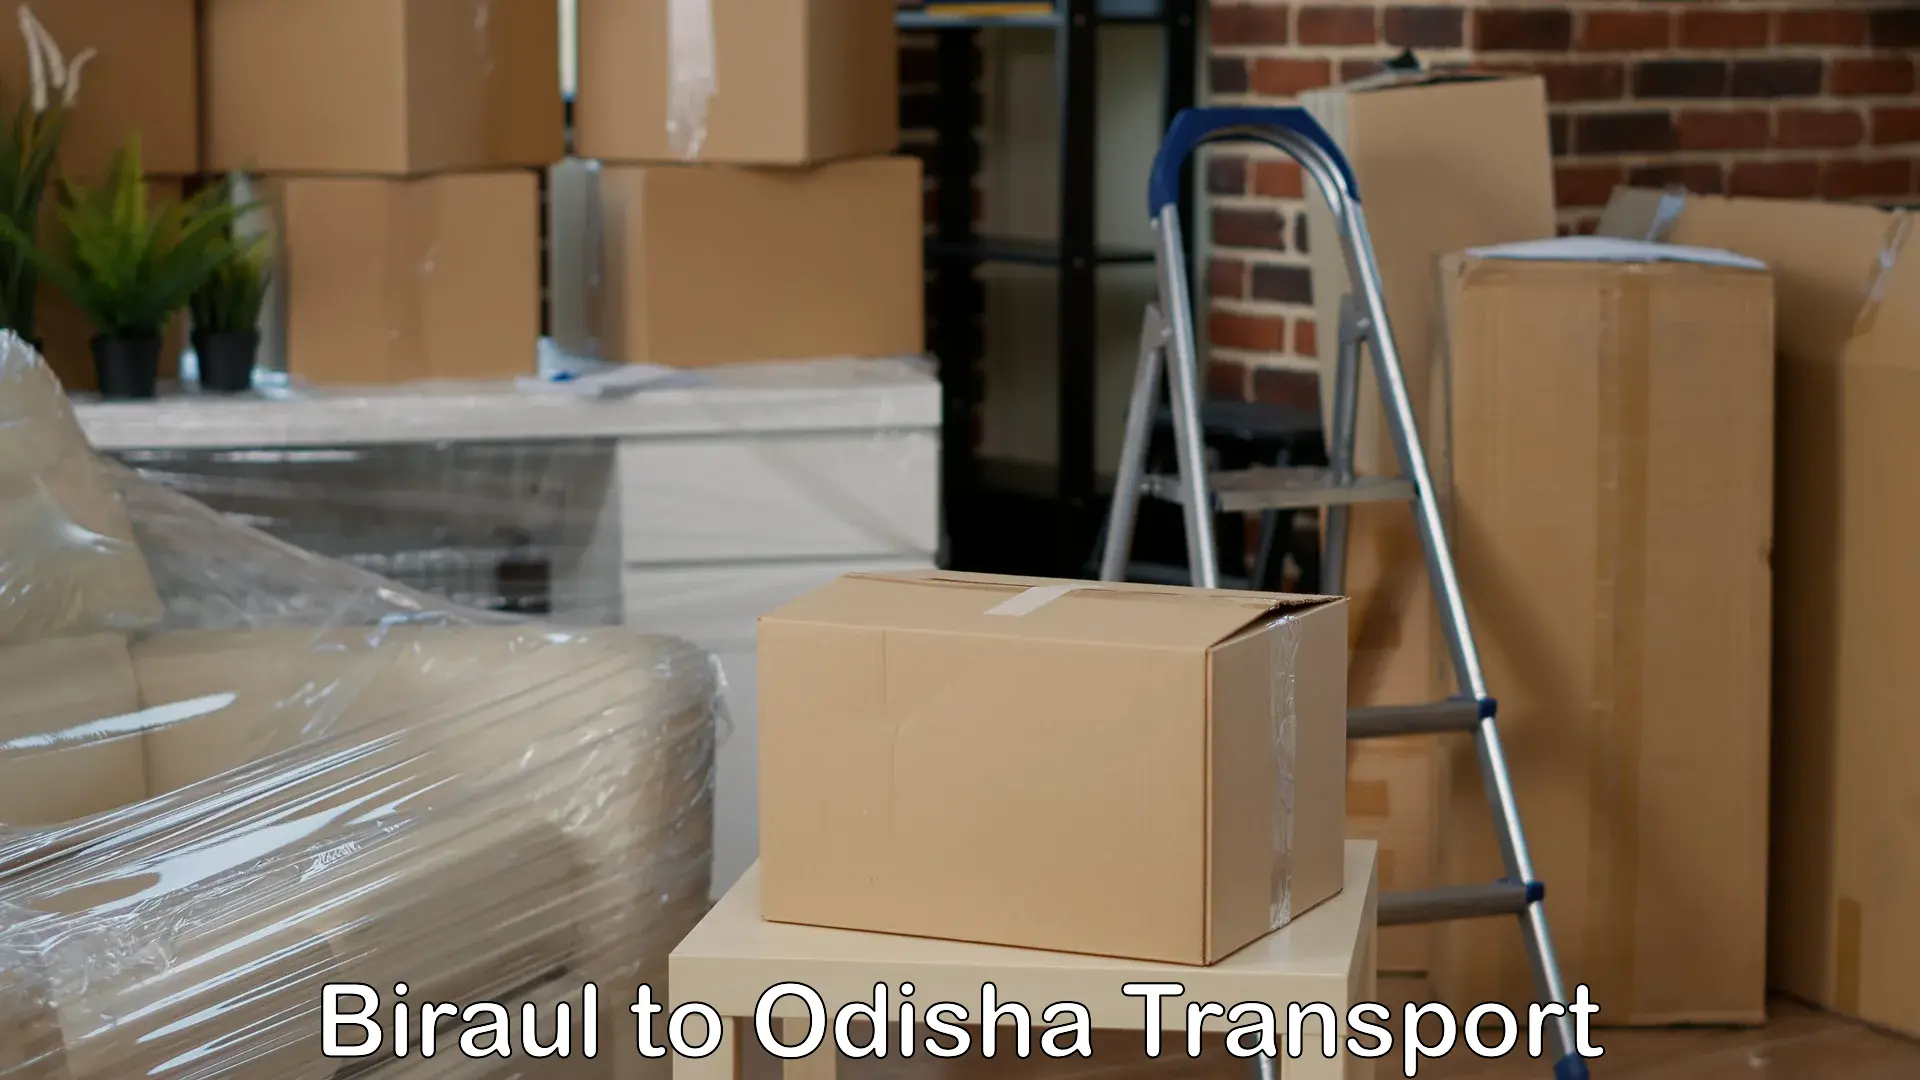 Truck transport companies in India Biraul to Chandbali